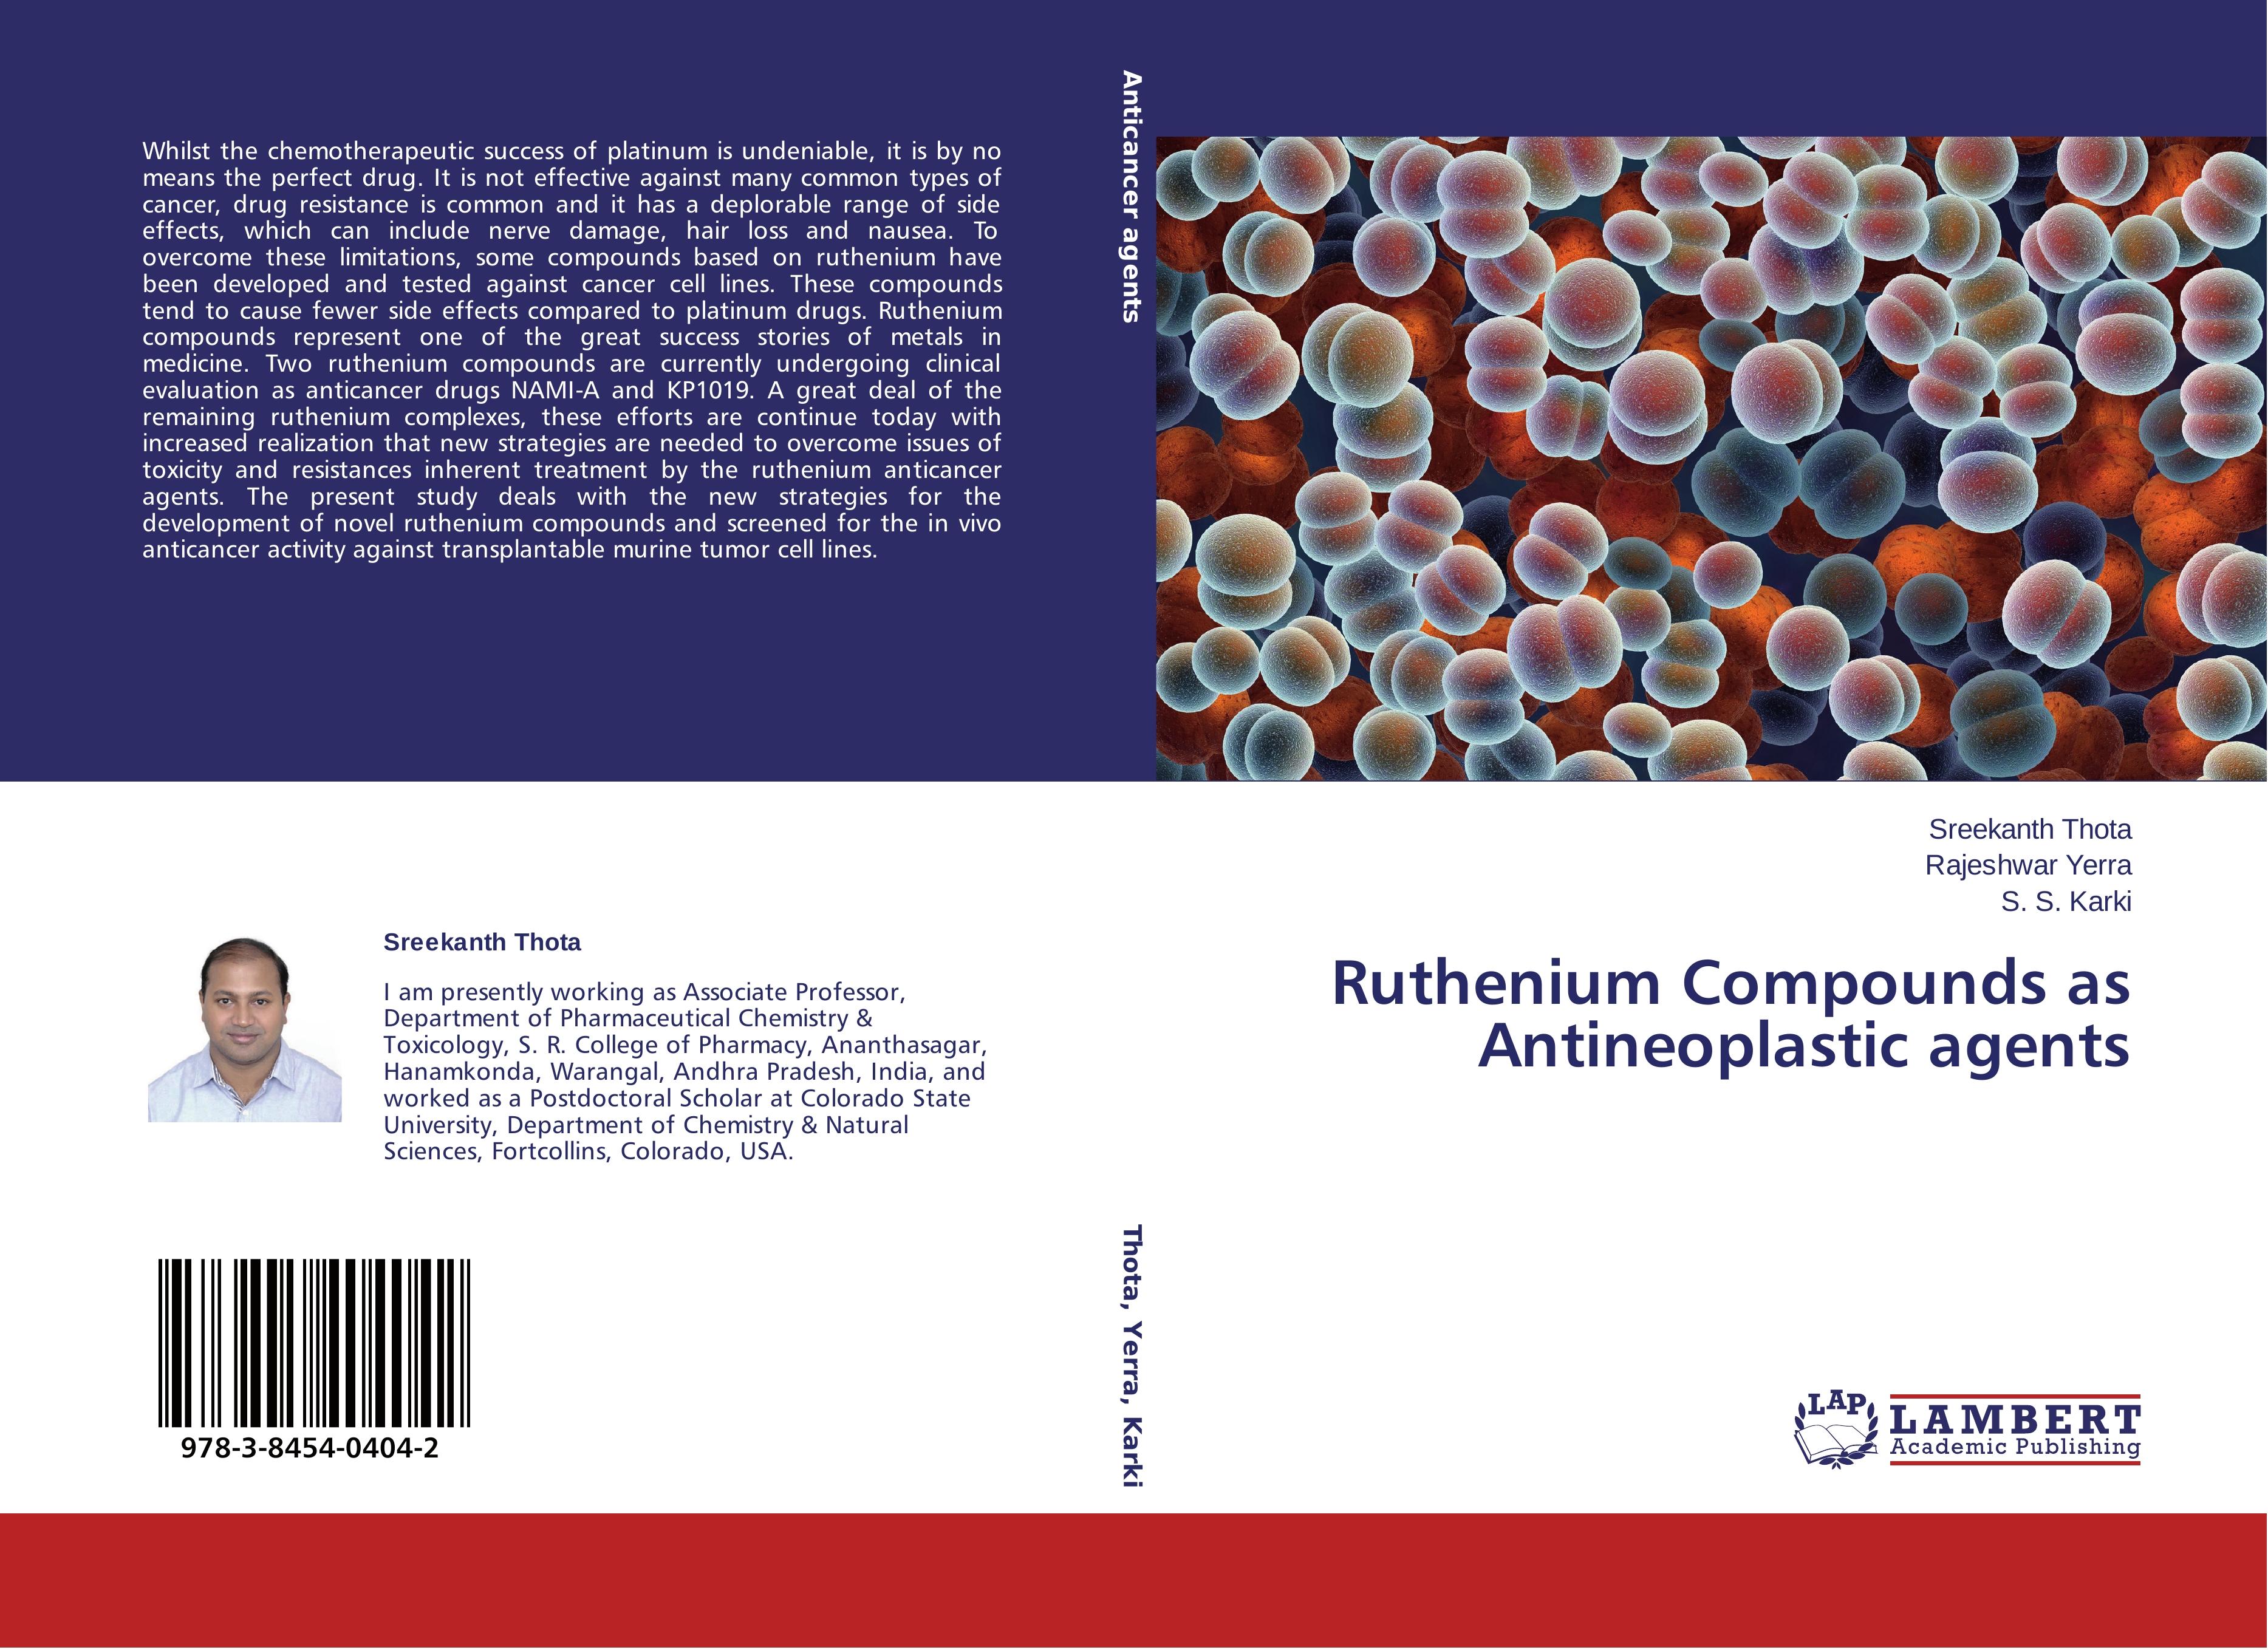 Ruthenium Compounds as Antineoplastic agents - Sreekanth Thota Rajeshwar Yerra S. S. Karki